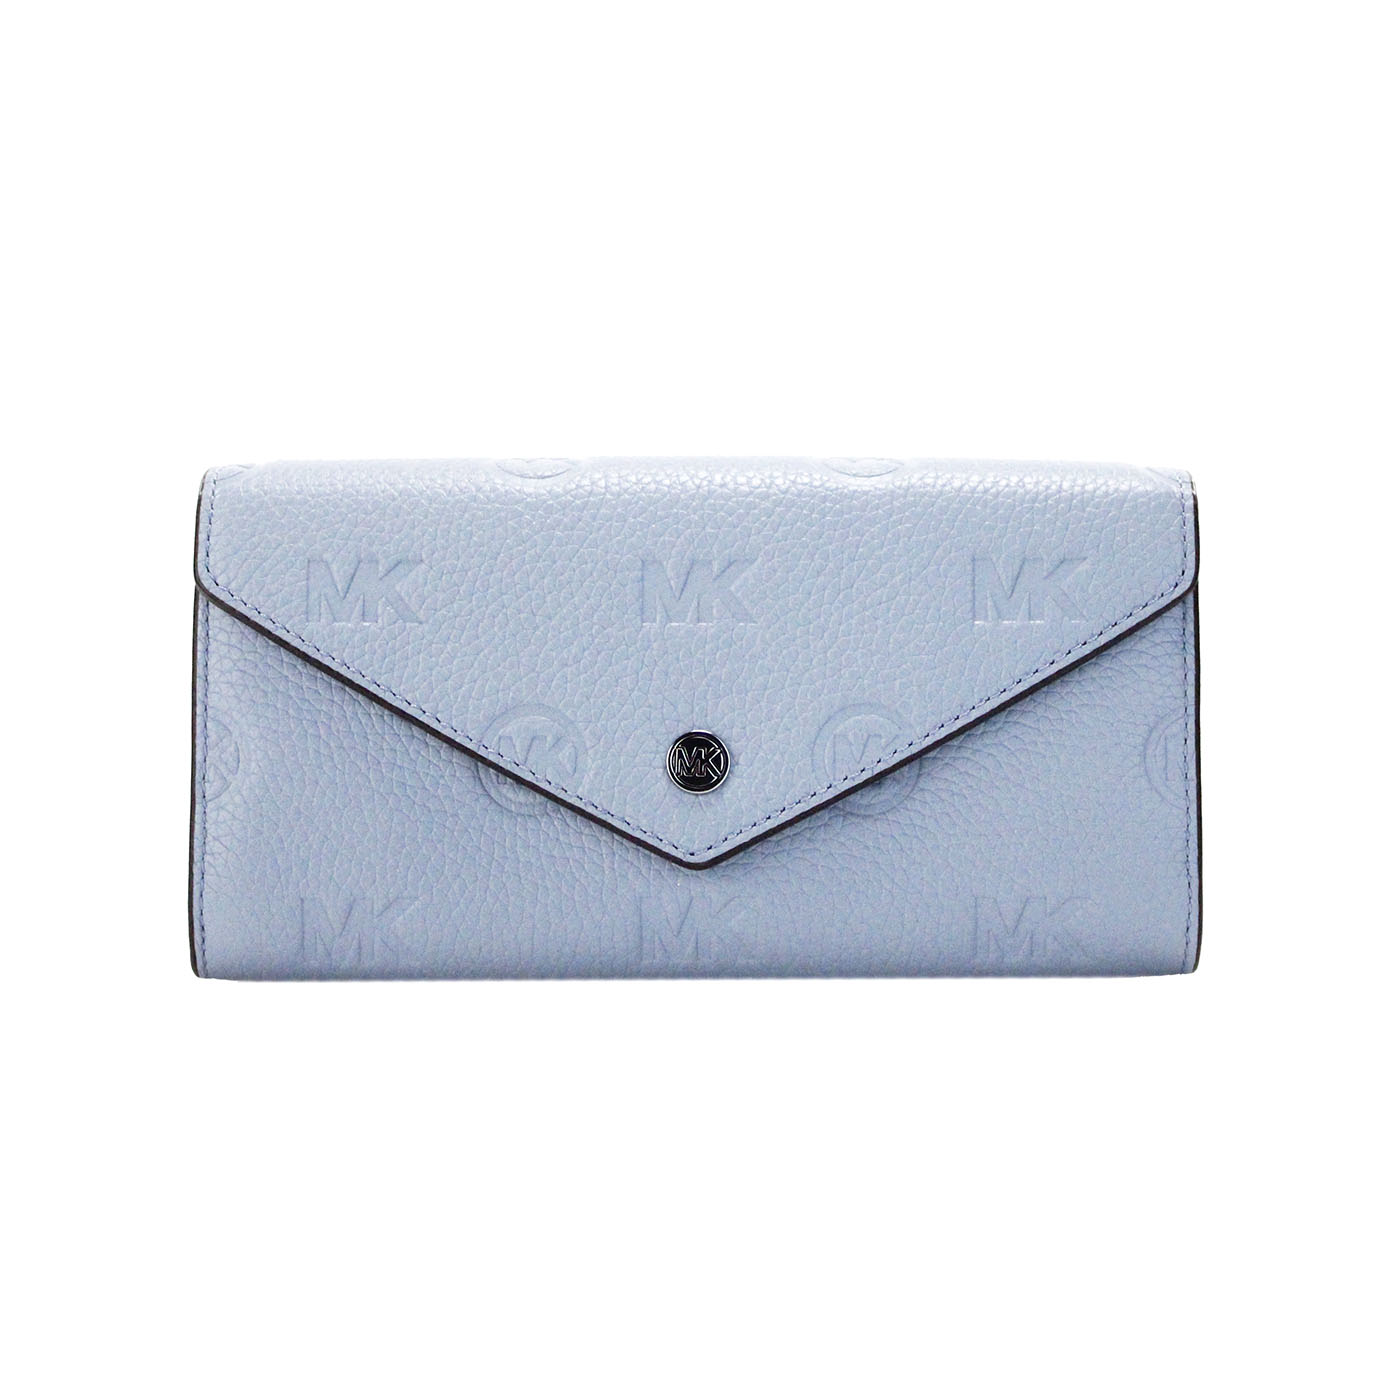 Jet Set Large Pale Blue Embossed Envelope Continental Clutch Wallet - Divitiae Glamour